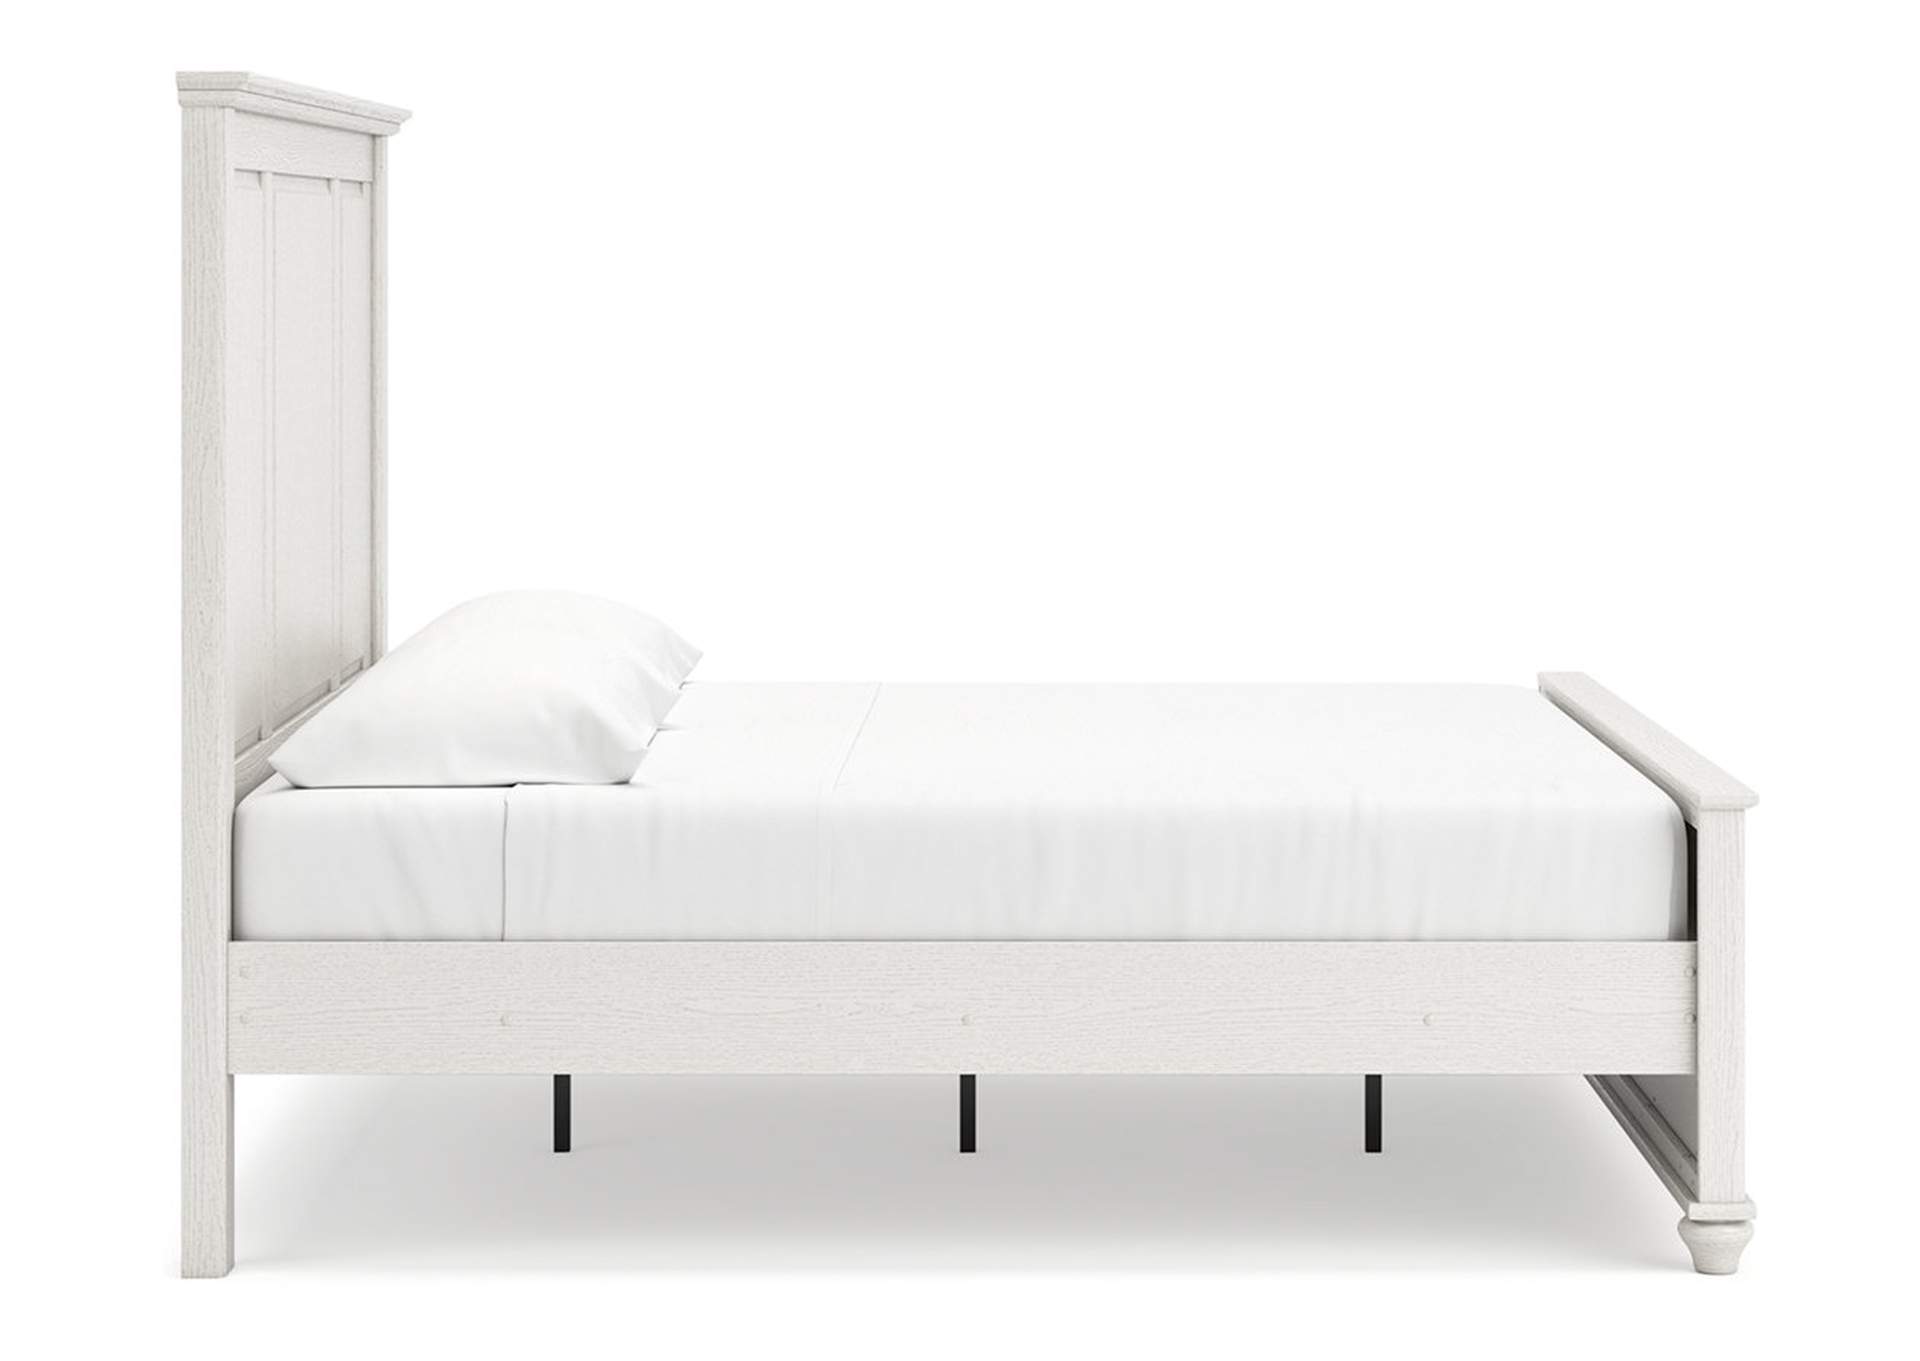 Grantoni King Panel Bed,Signature Design By Ashley